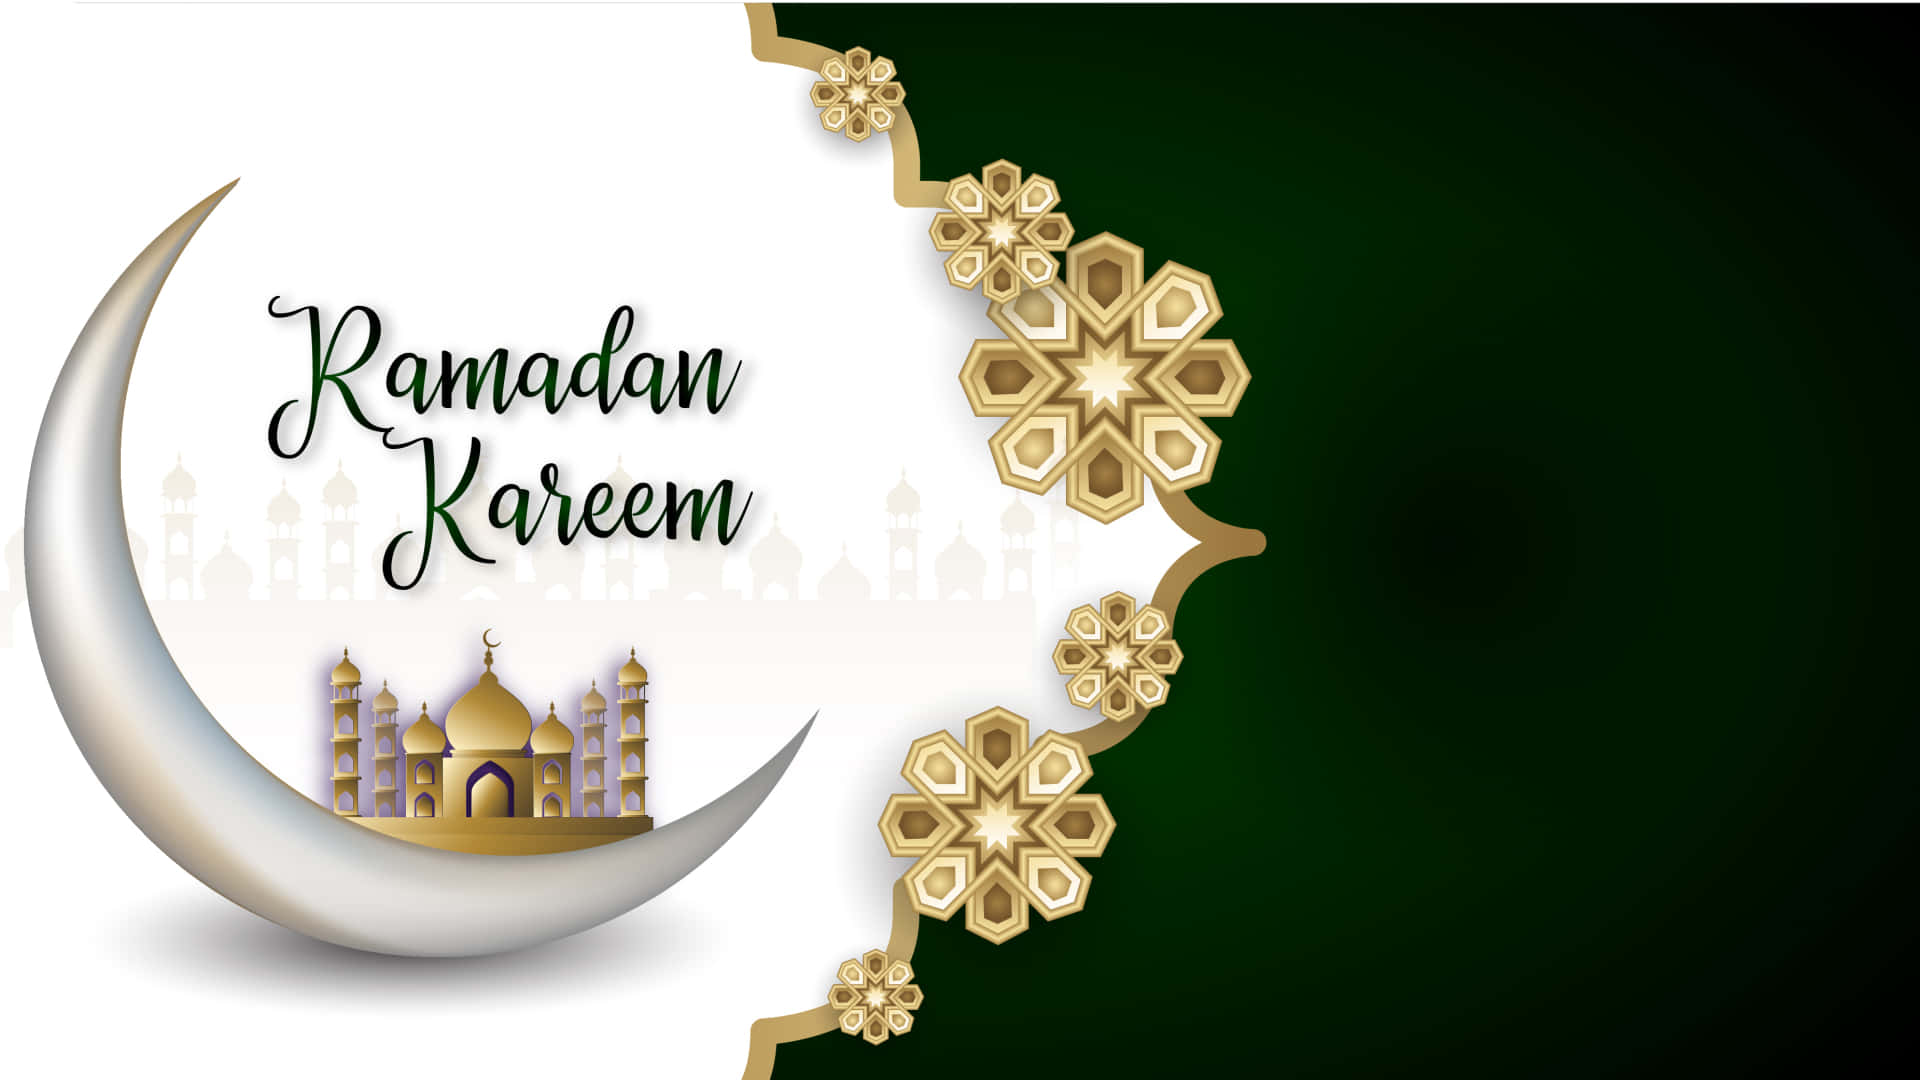 Celebrateil Santo Mese Di Ramadan